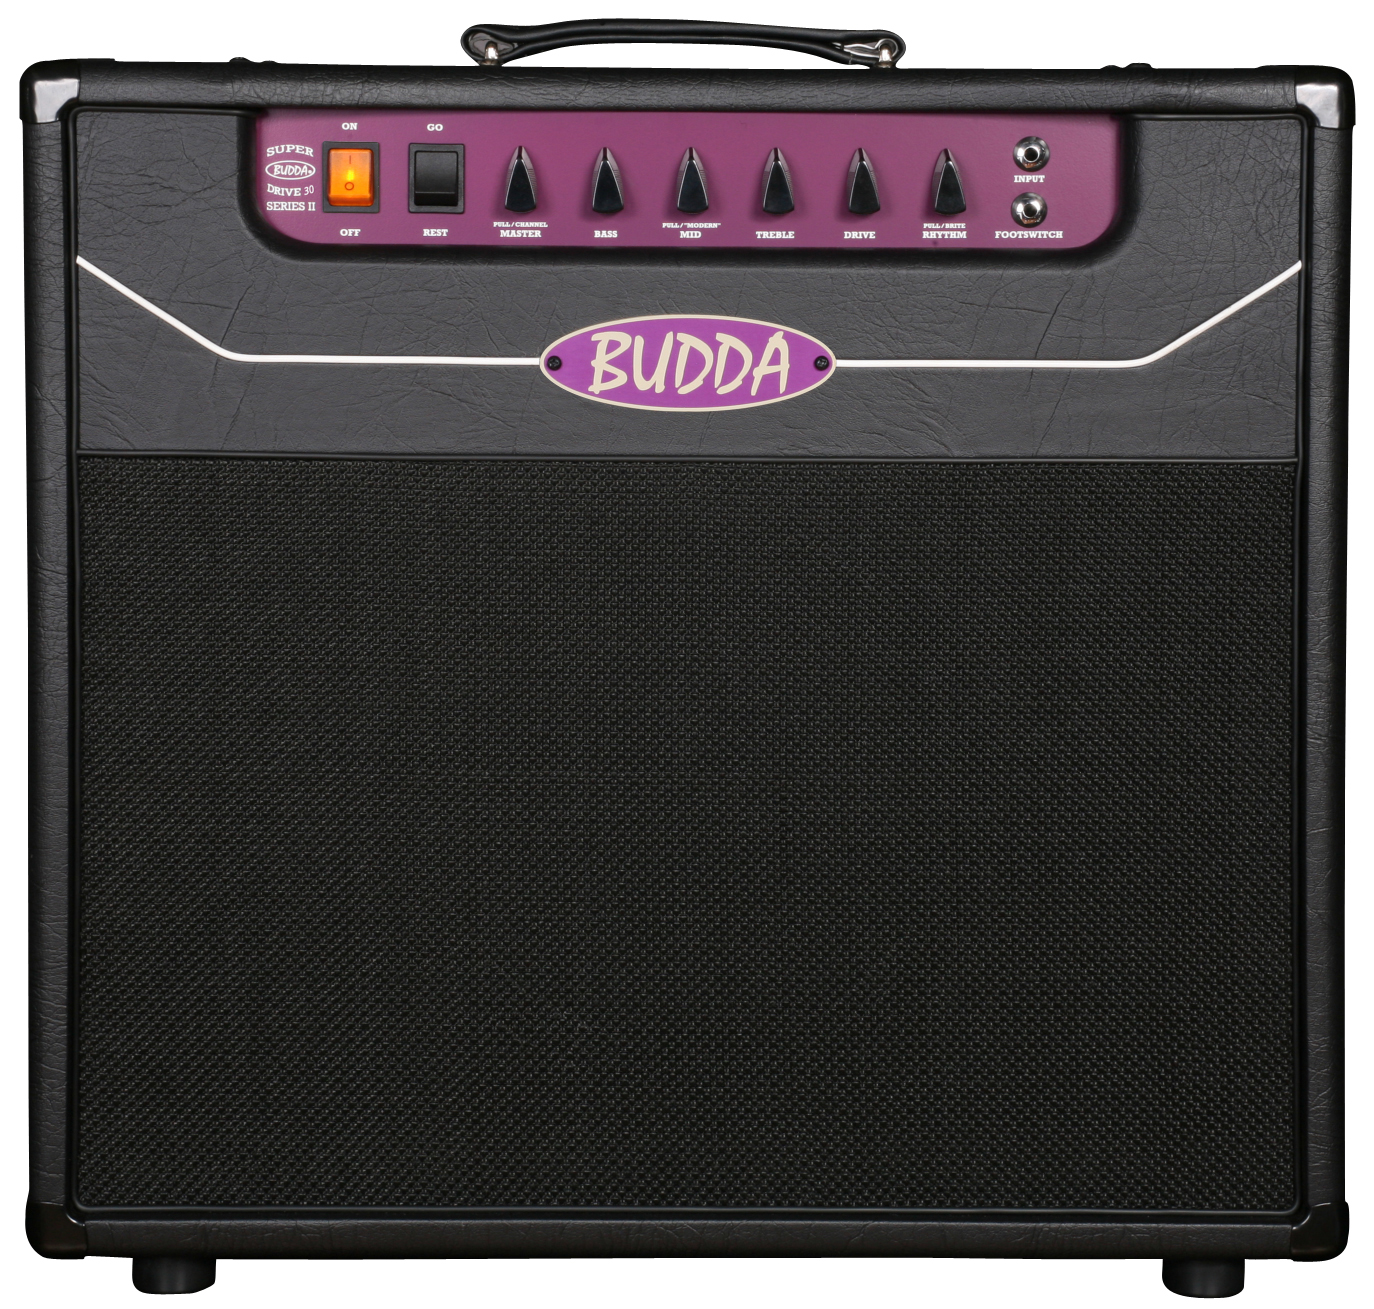 Budda Budda Superdrive 30 Series II Guitar Combo Amplifier